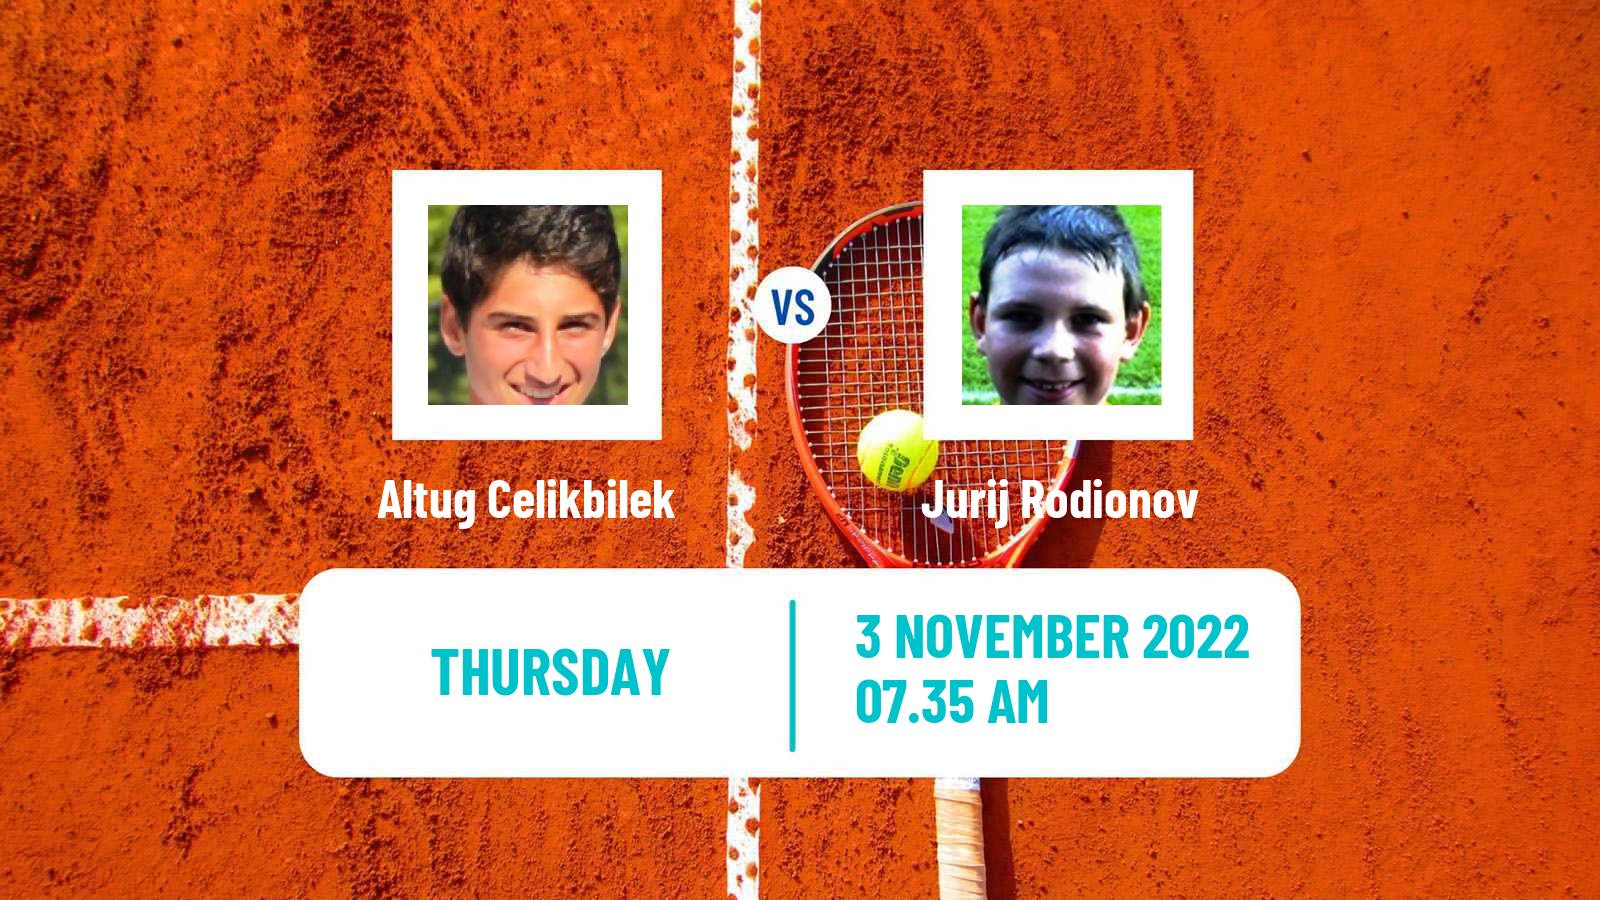 Tennis ATP Challenger Altug Celikbilek - Jurij Rodionov